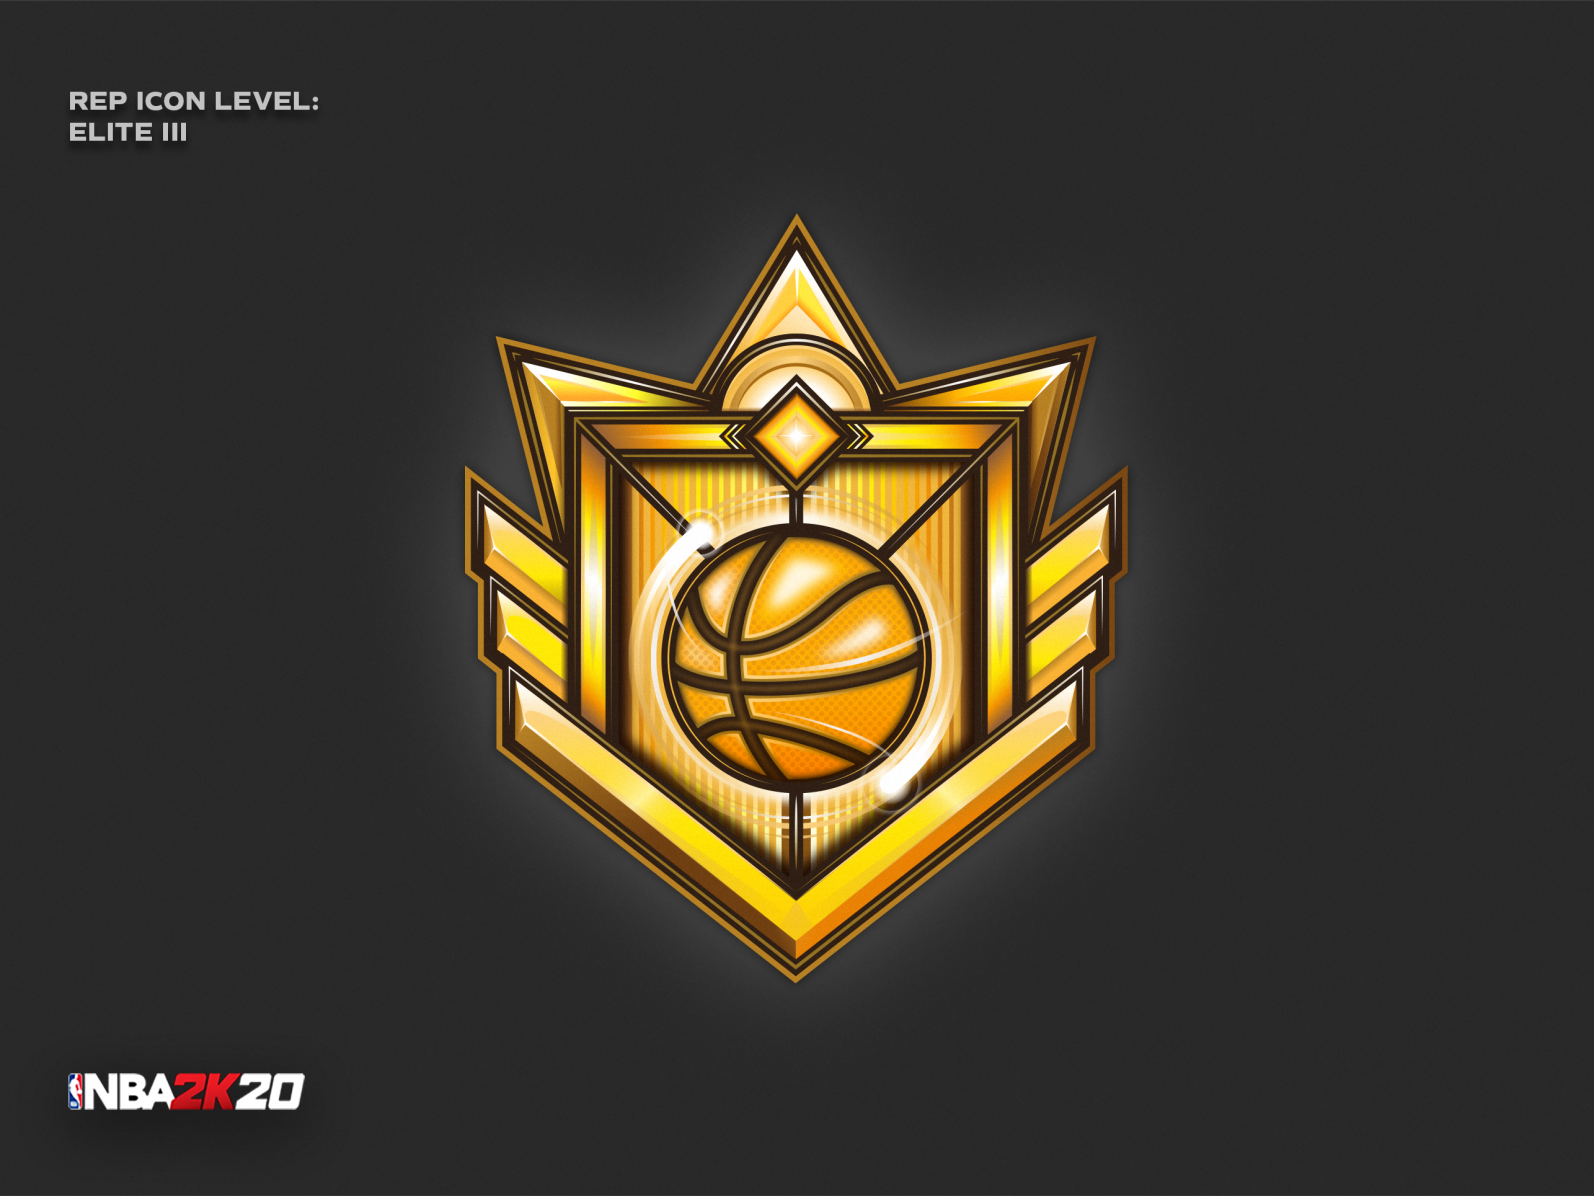 NBA 2K20 - Elite III rep icon by Michal Ruchel on Dribbble